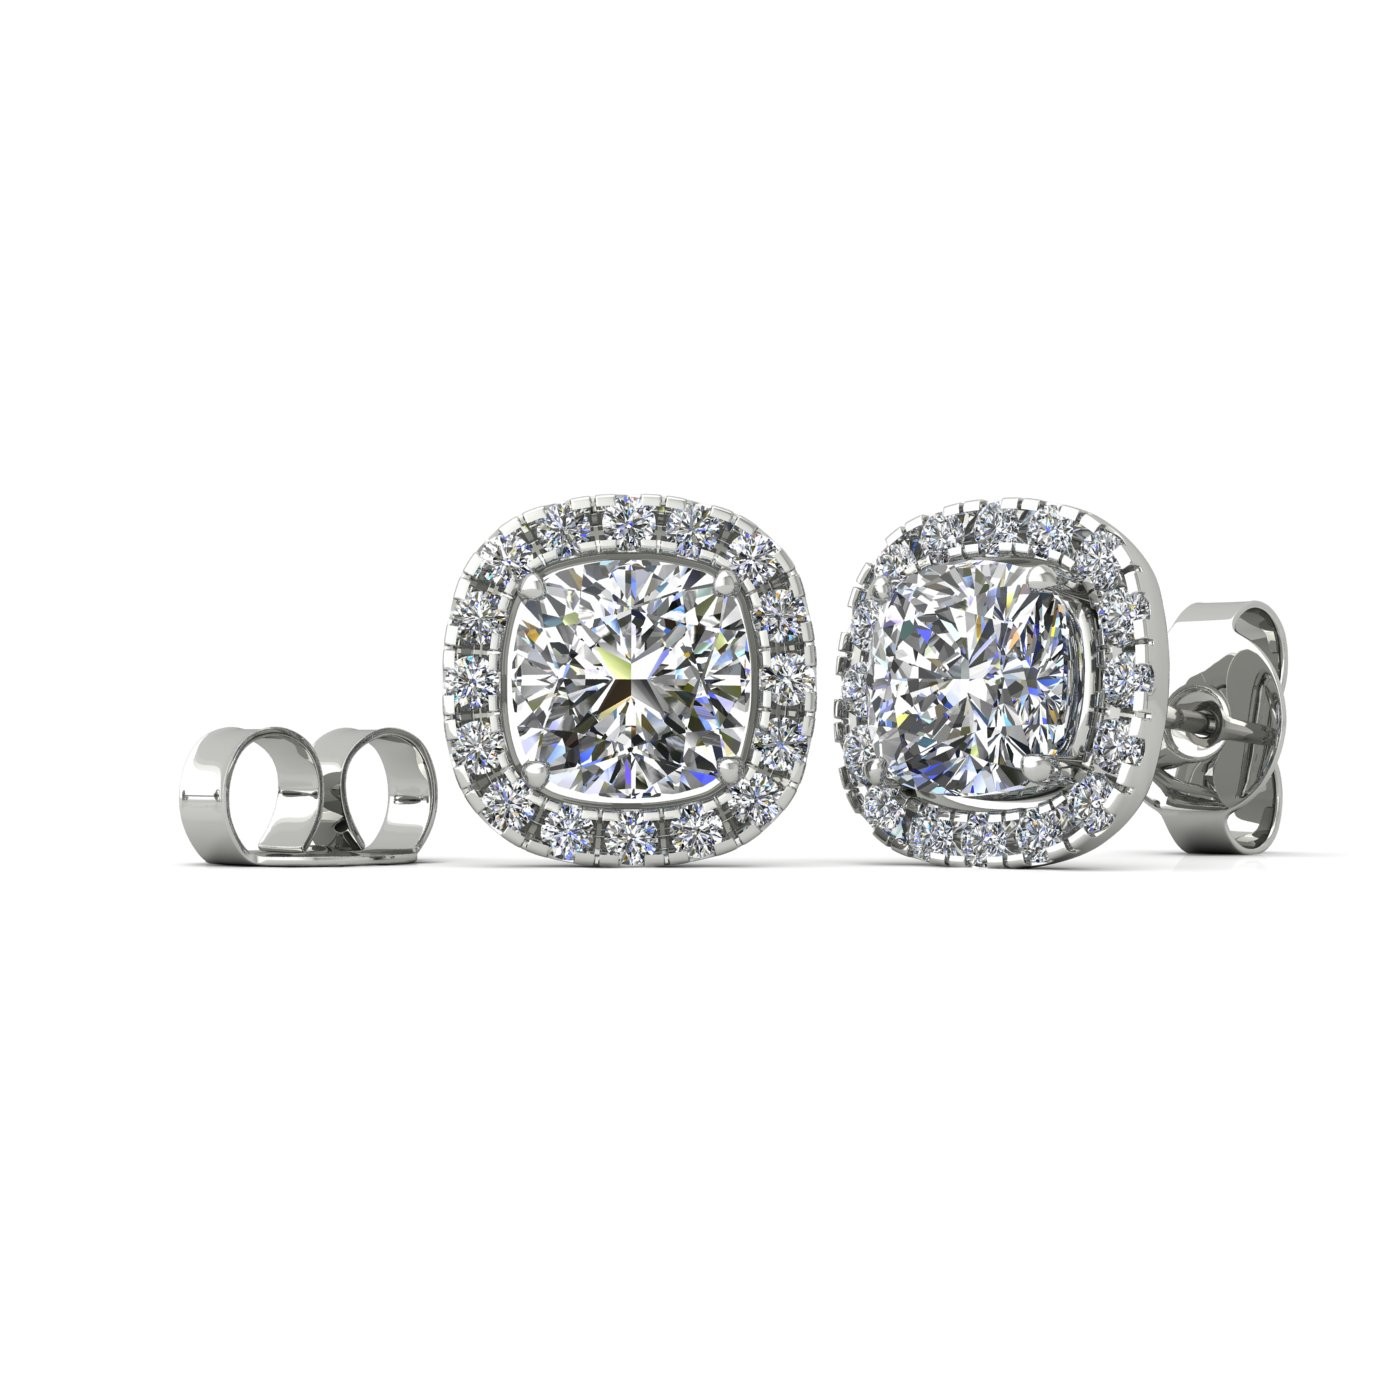 18k white gold  1,0 ct each (2,0 tcw) 4 prongs cushion shape diamond earrings with diamond pavÉ set halo Photos & images